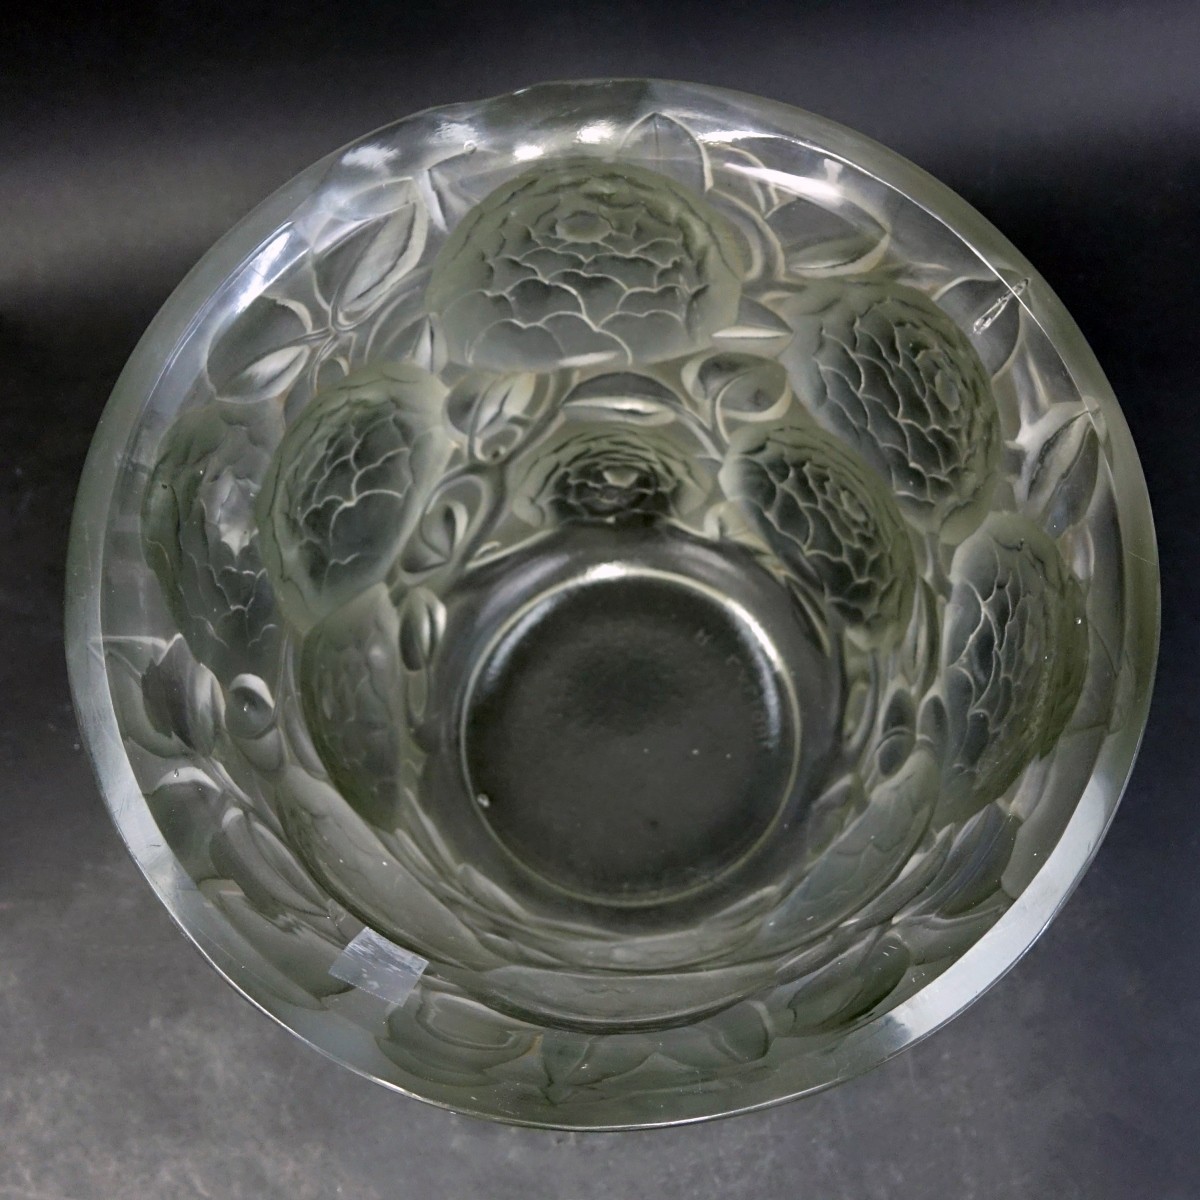 Large Rene Lalique "Oran" Frosted Art Glass Vase